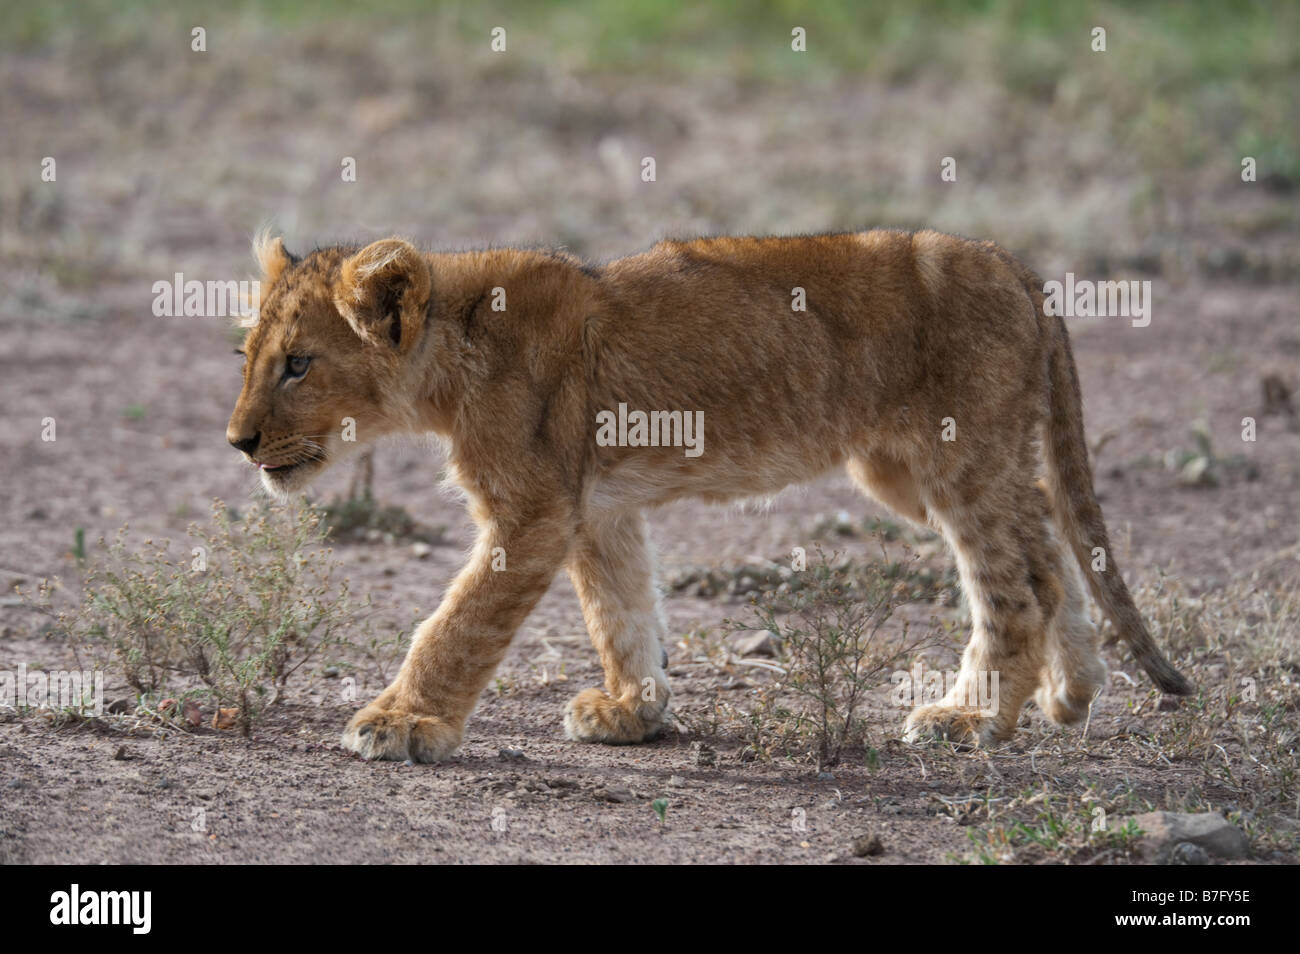 Young lion cub walking along trail Stock Photo